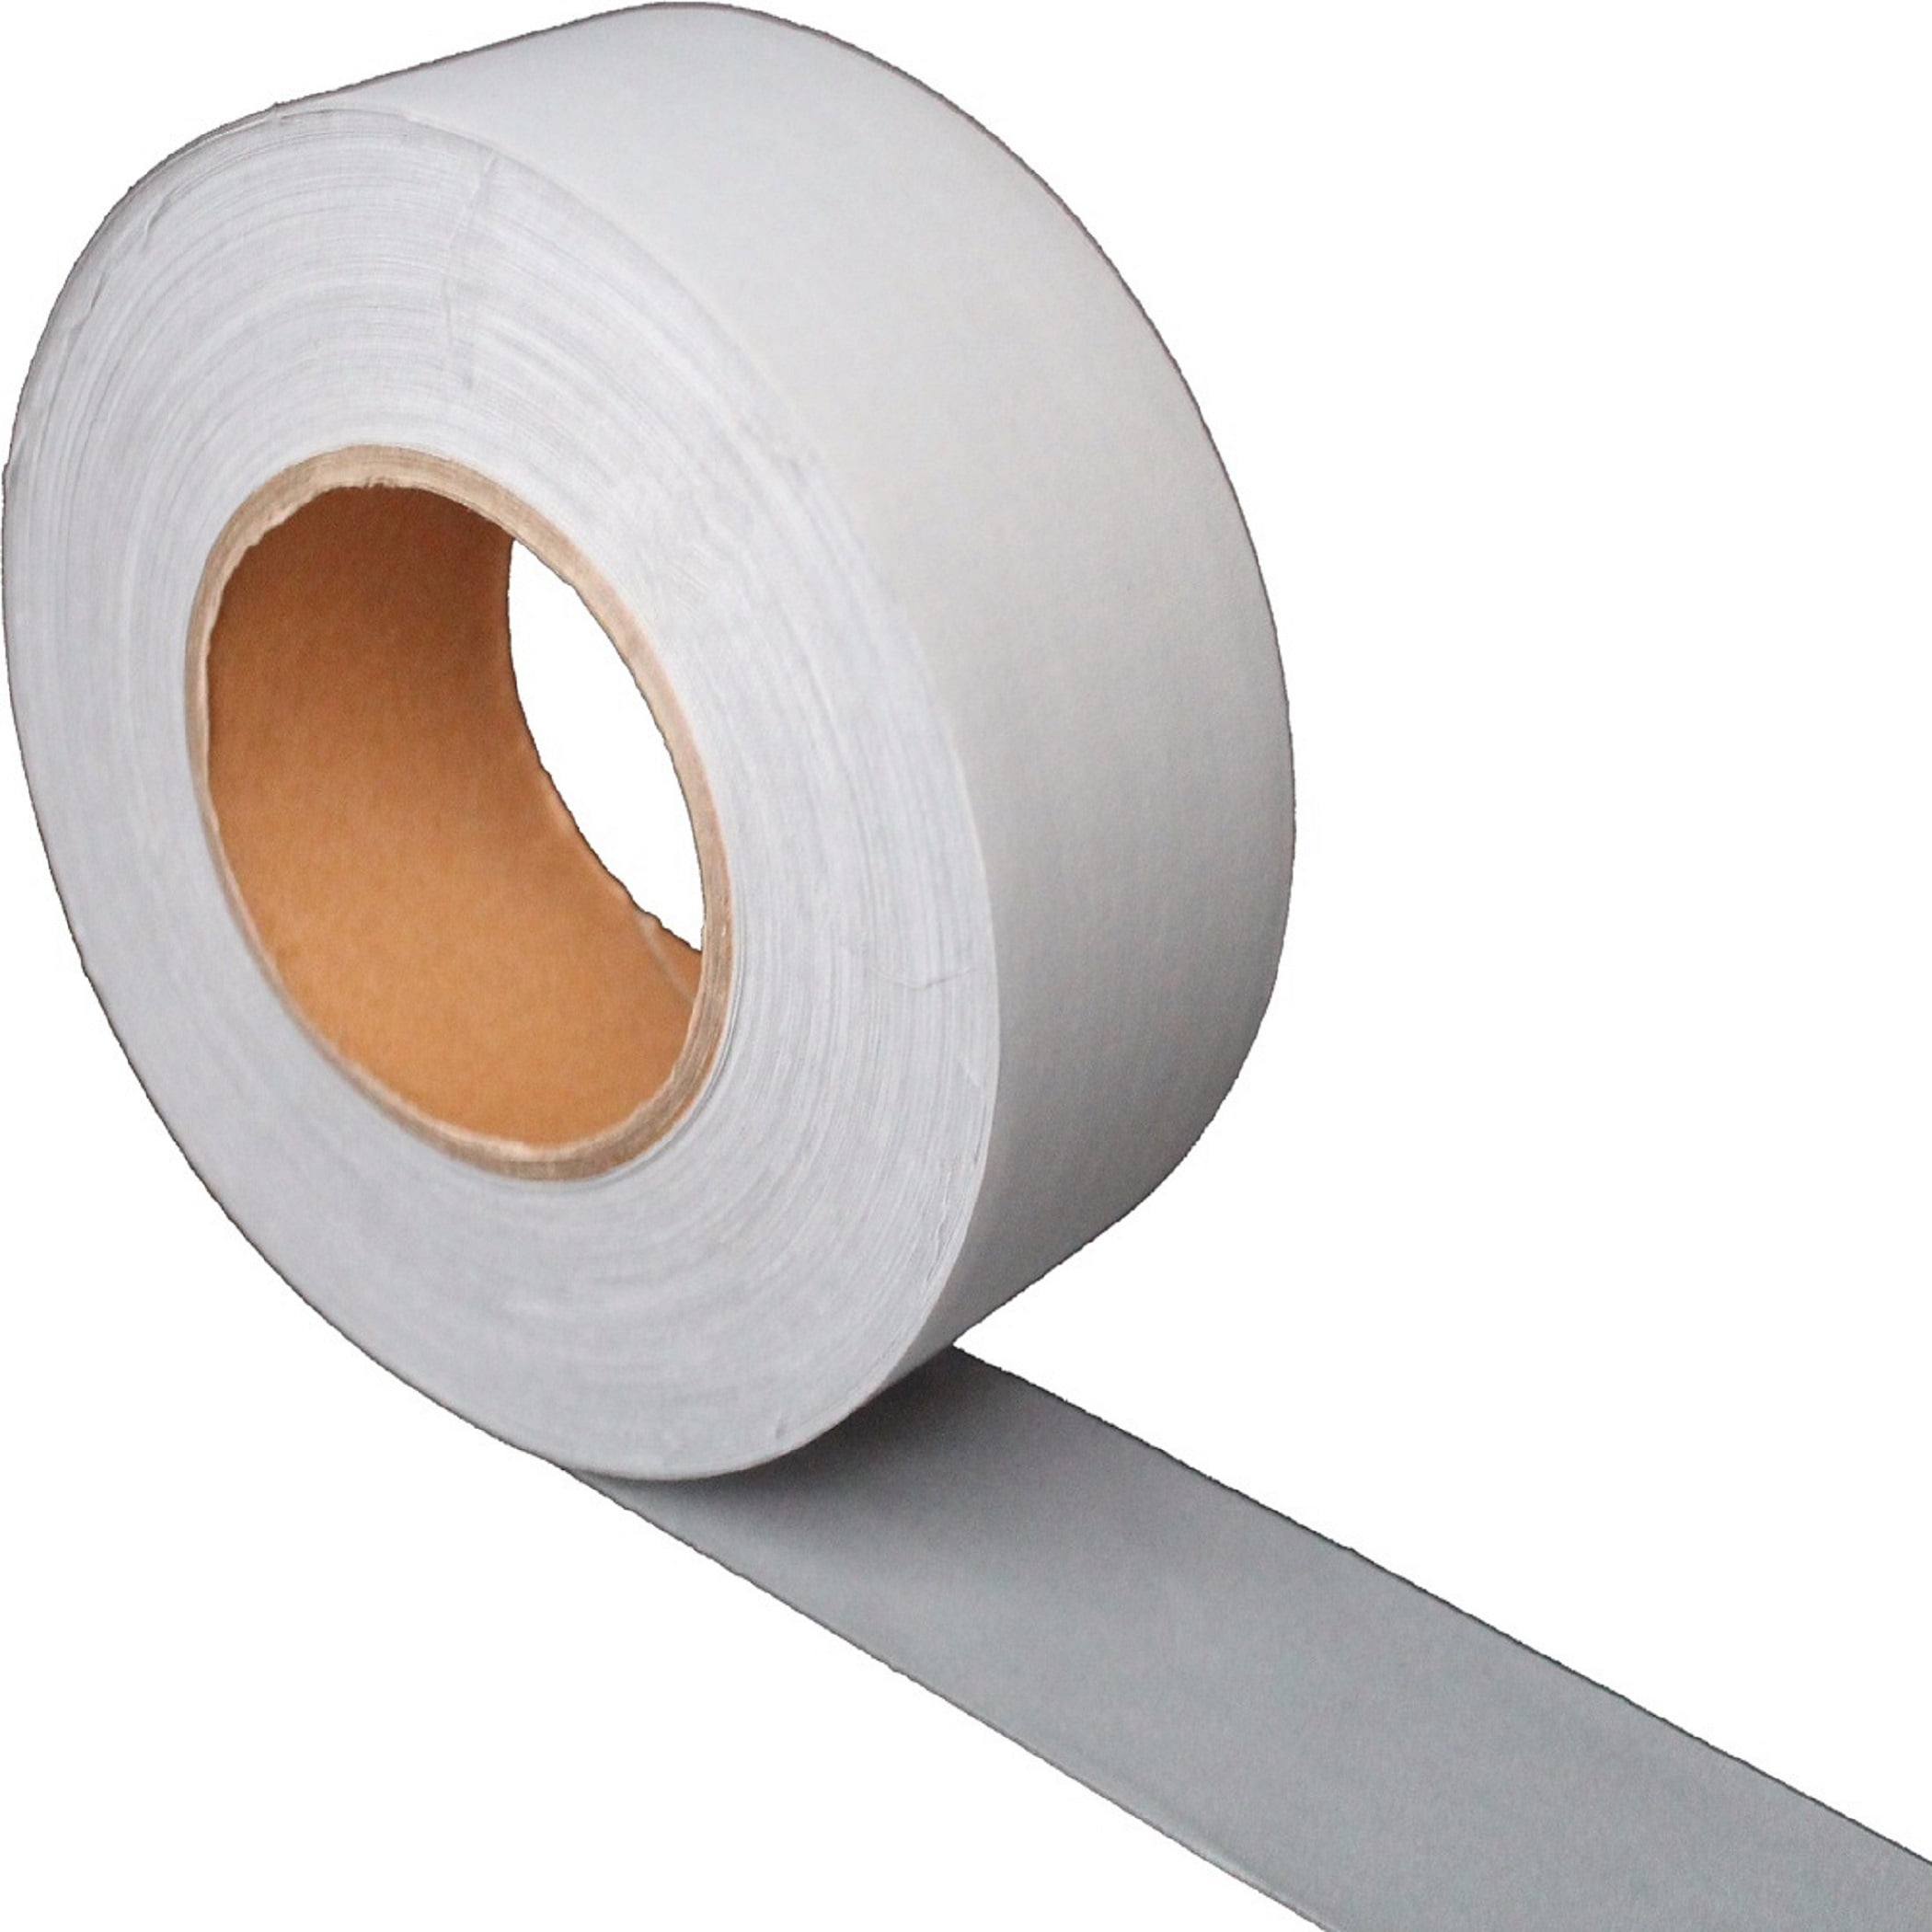  HeatnBond PeelnStick 3346 Fabric Fuse Adhesive 5/8 x 20 ft Roll